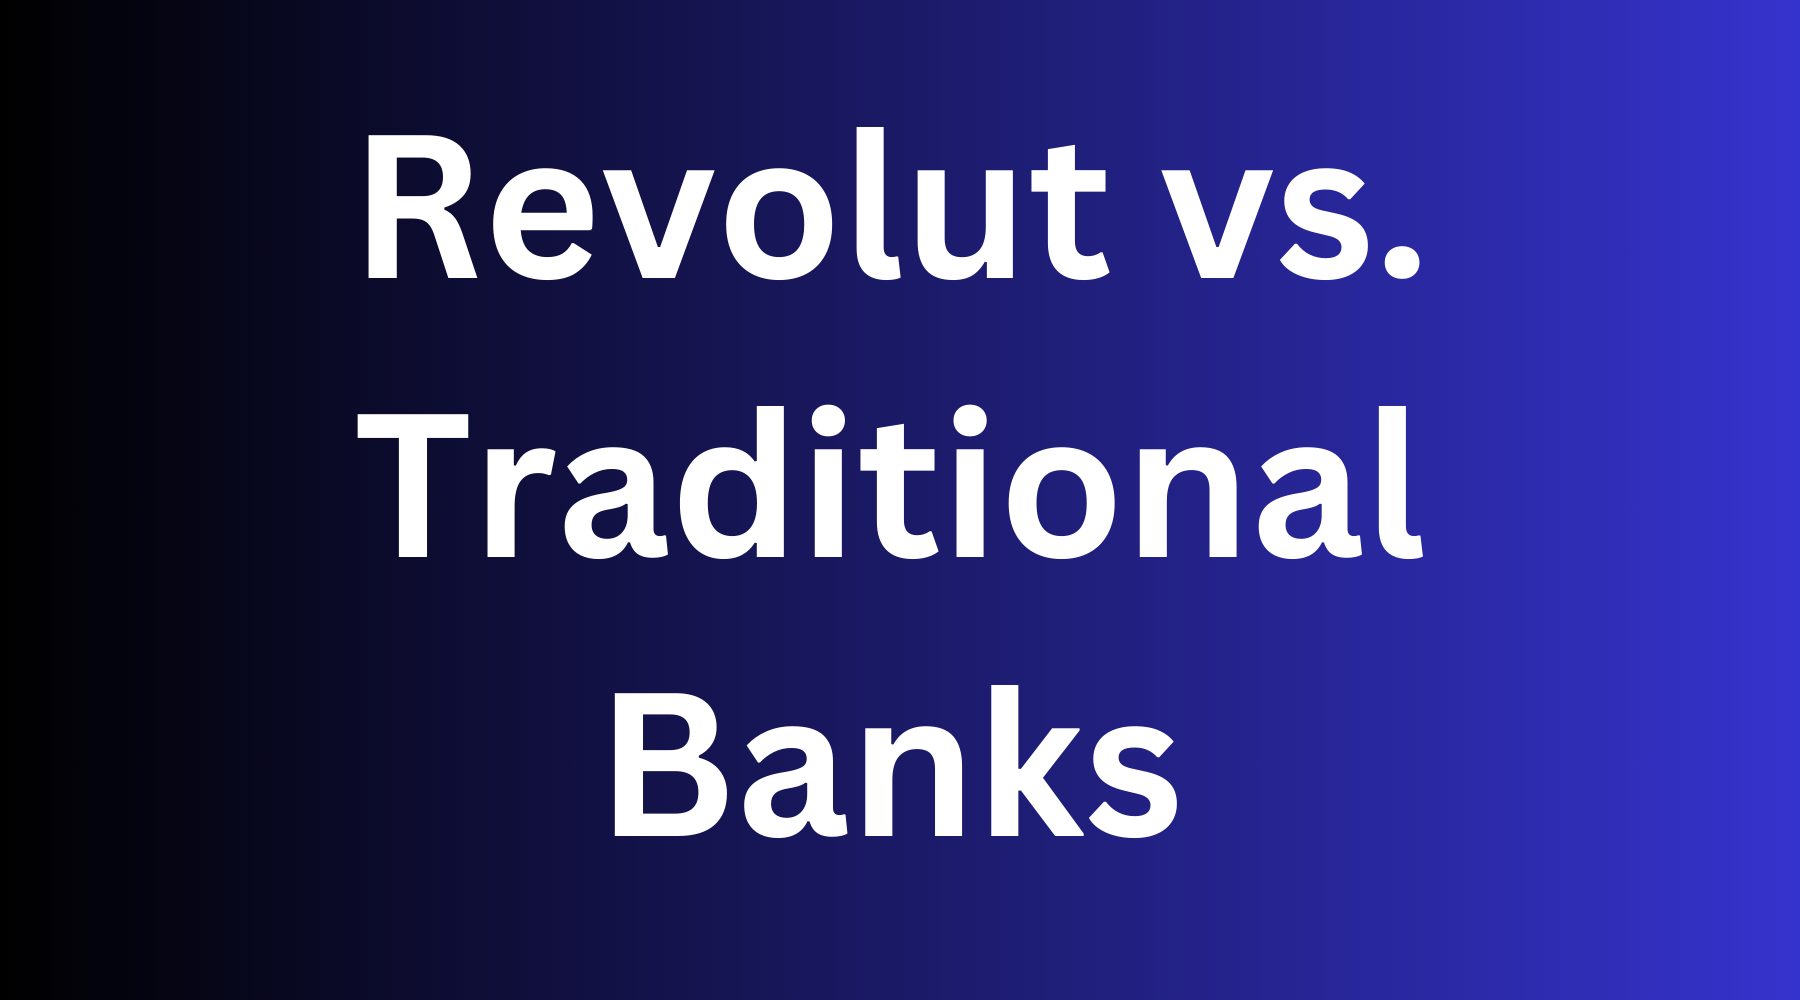 Revolut vs. Traditional Banks